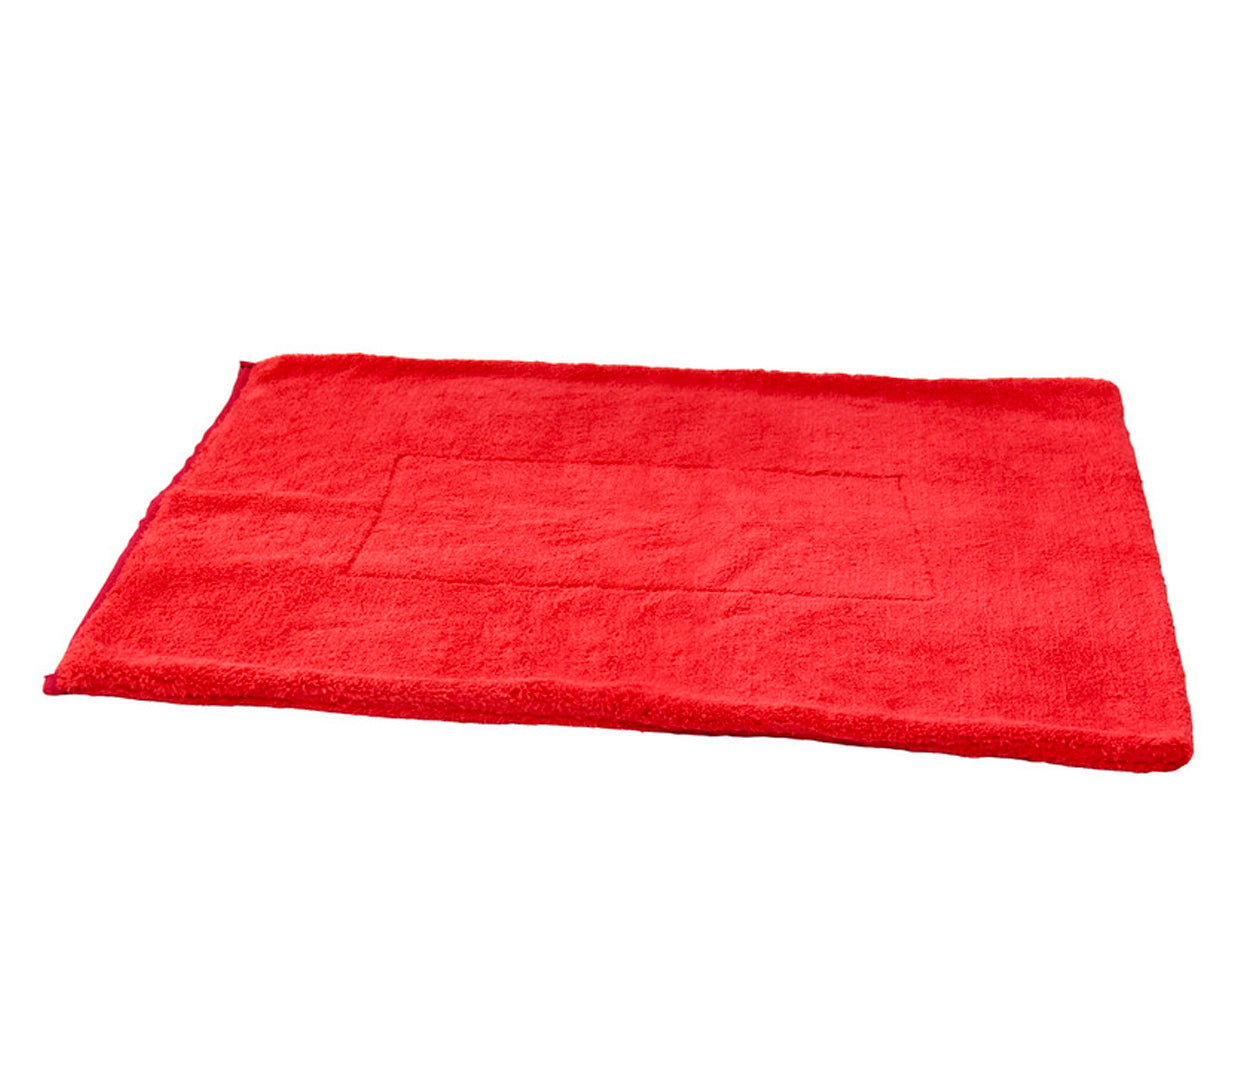 Maxshine Big Red Microfibre Drying Towel